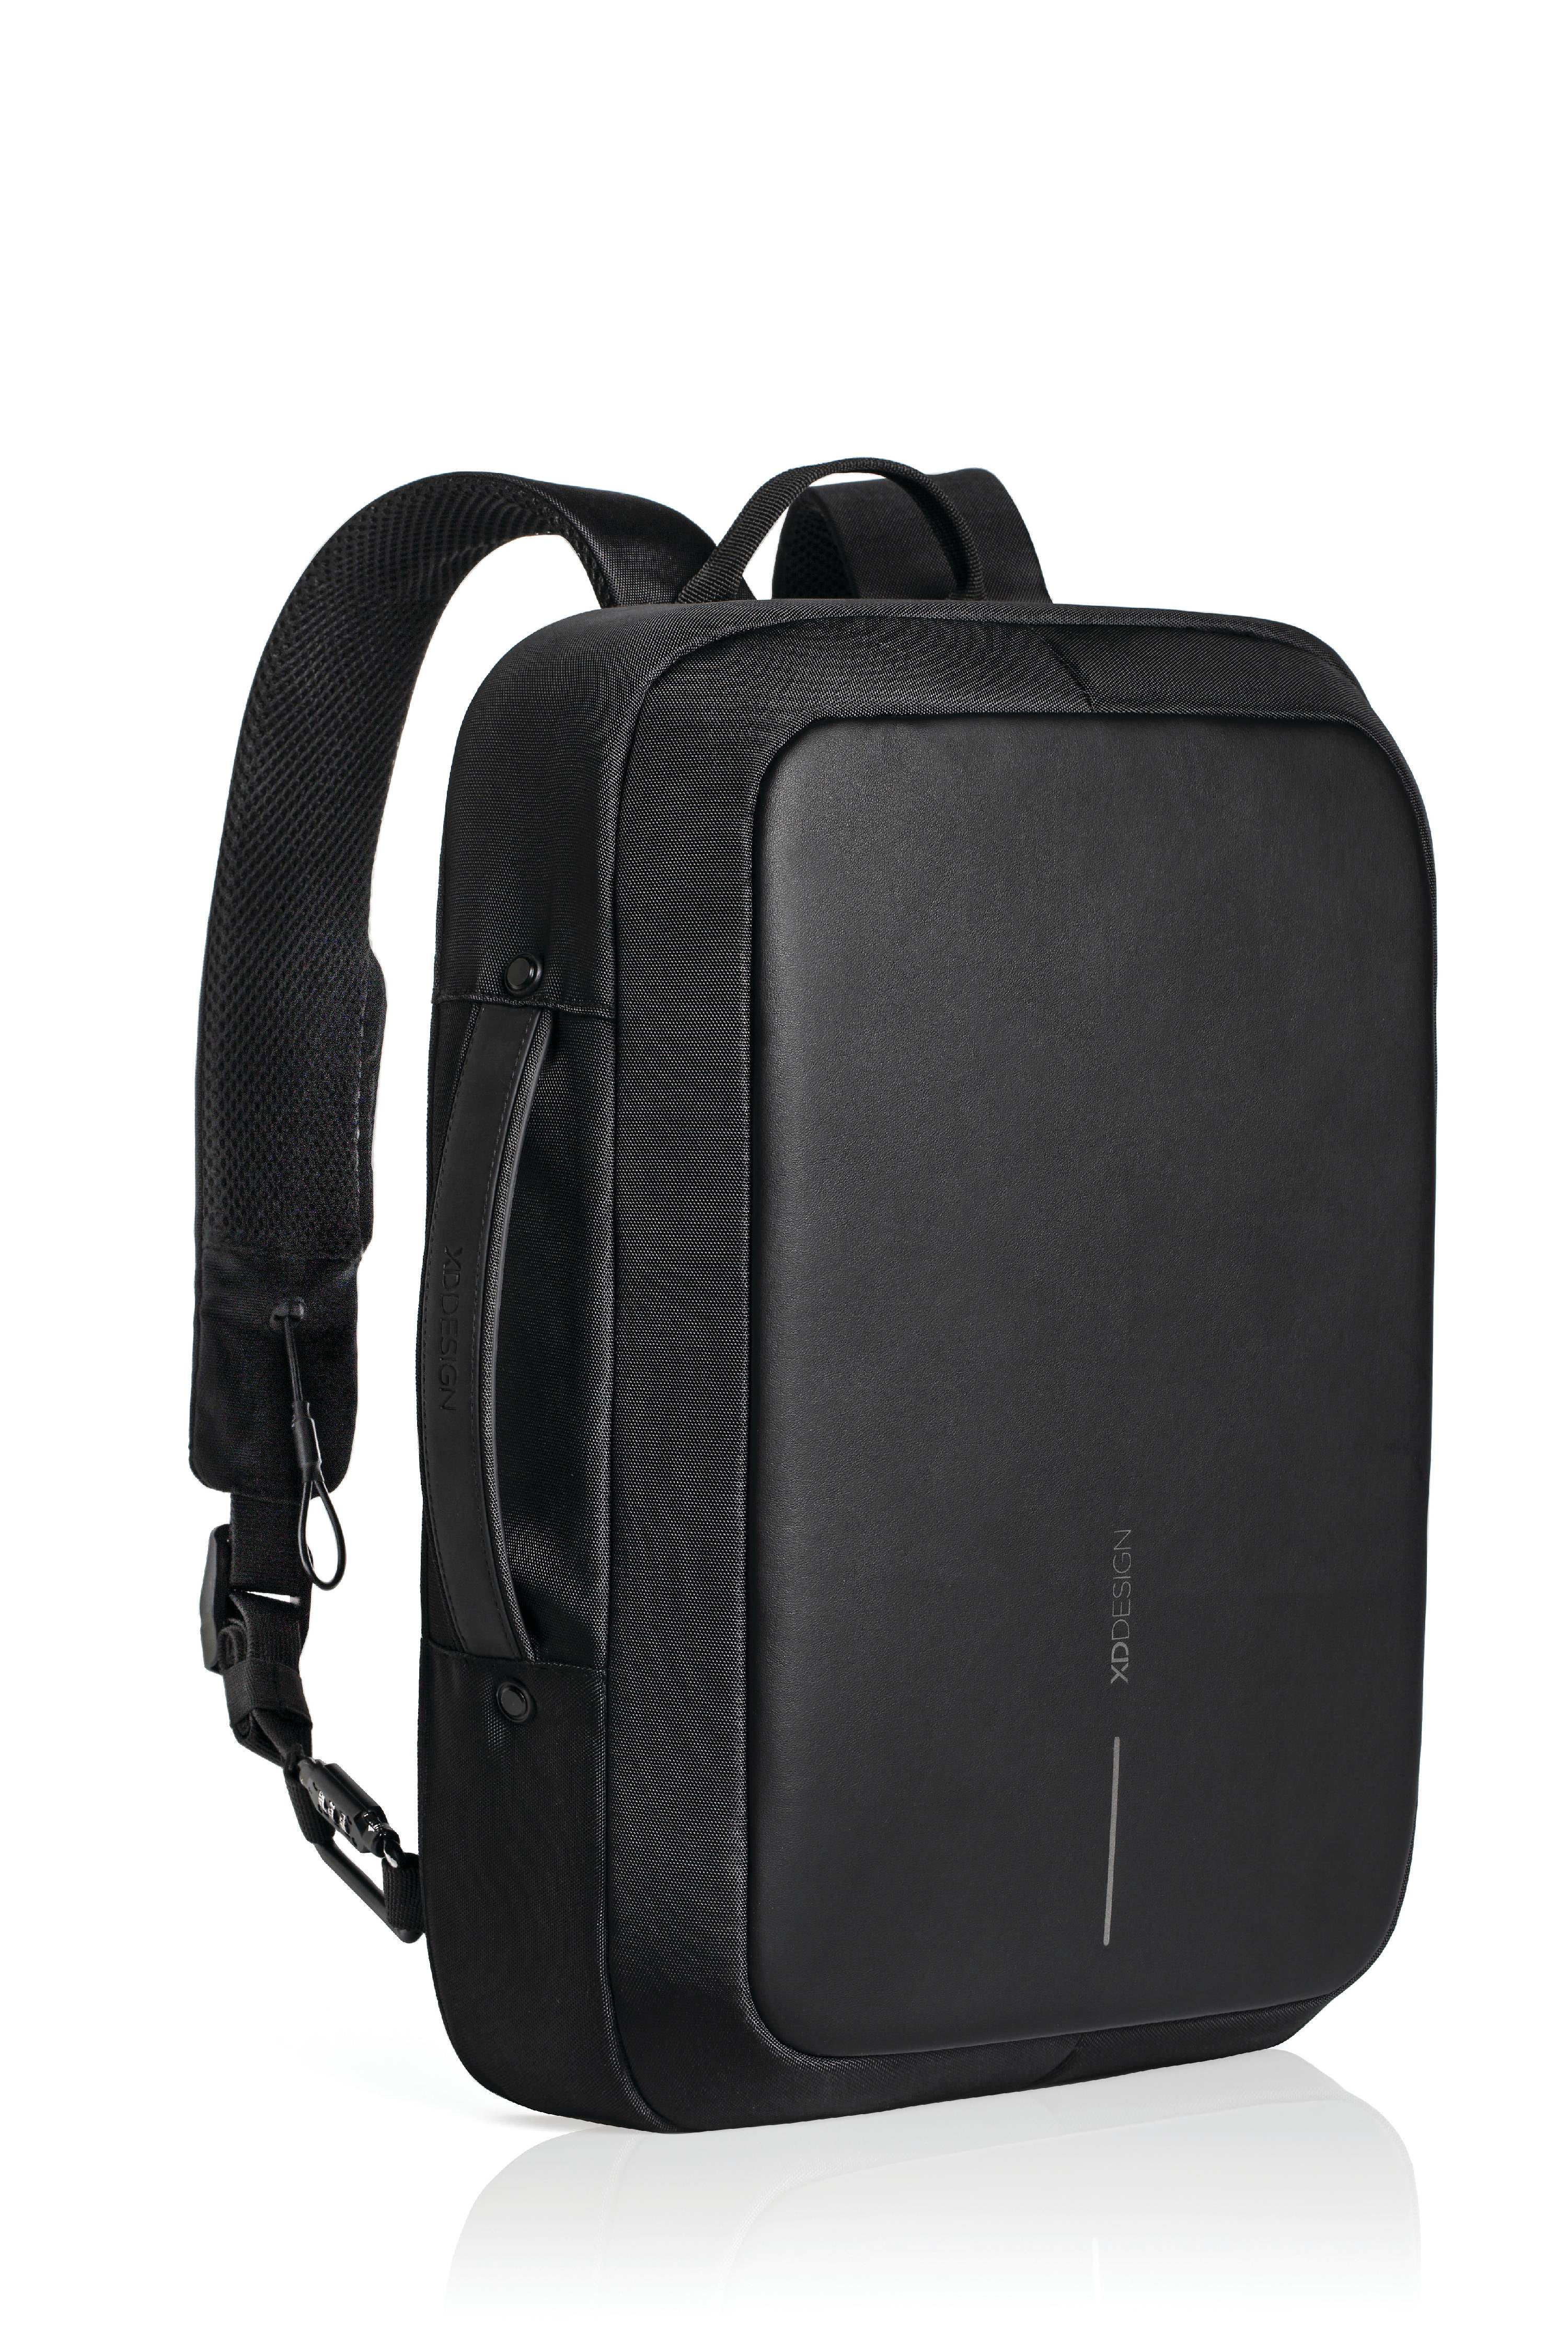 XD Design Unisex Bobby Bizz Anti-Thef Backpack